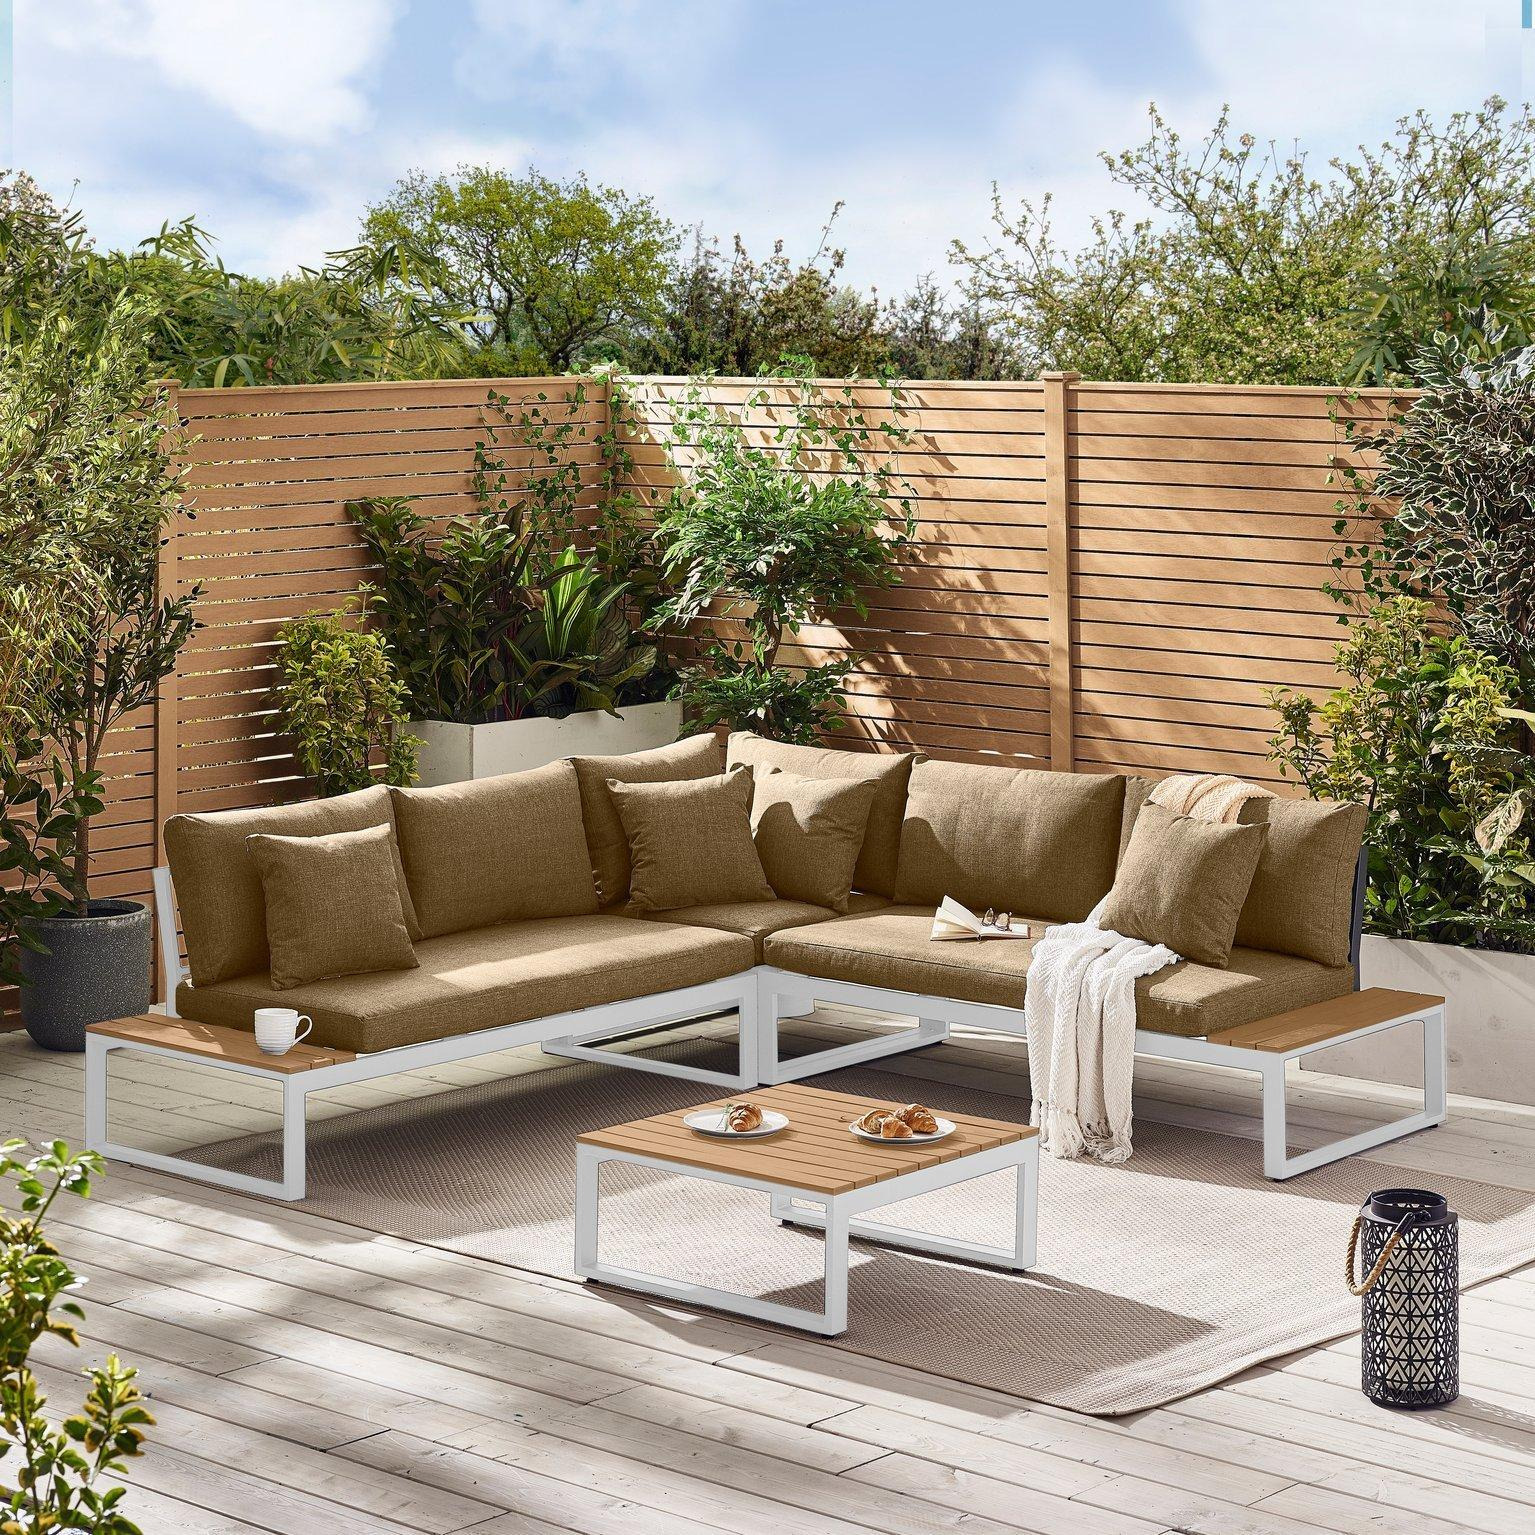 Dubai Metal & Wood Effect 6 Seat Outdoor Garden Corner Sofa & Coffee Table, Modern Garden Furniture Set - image 1